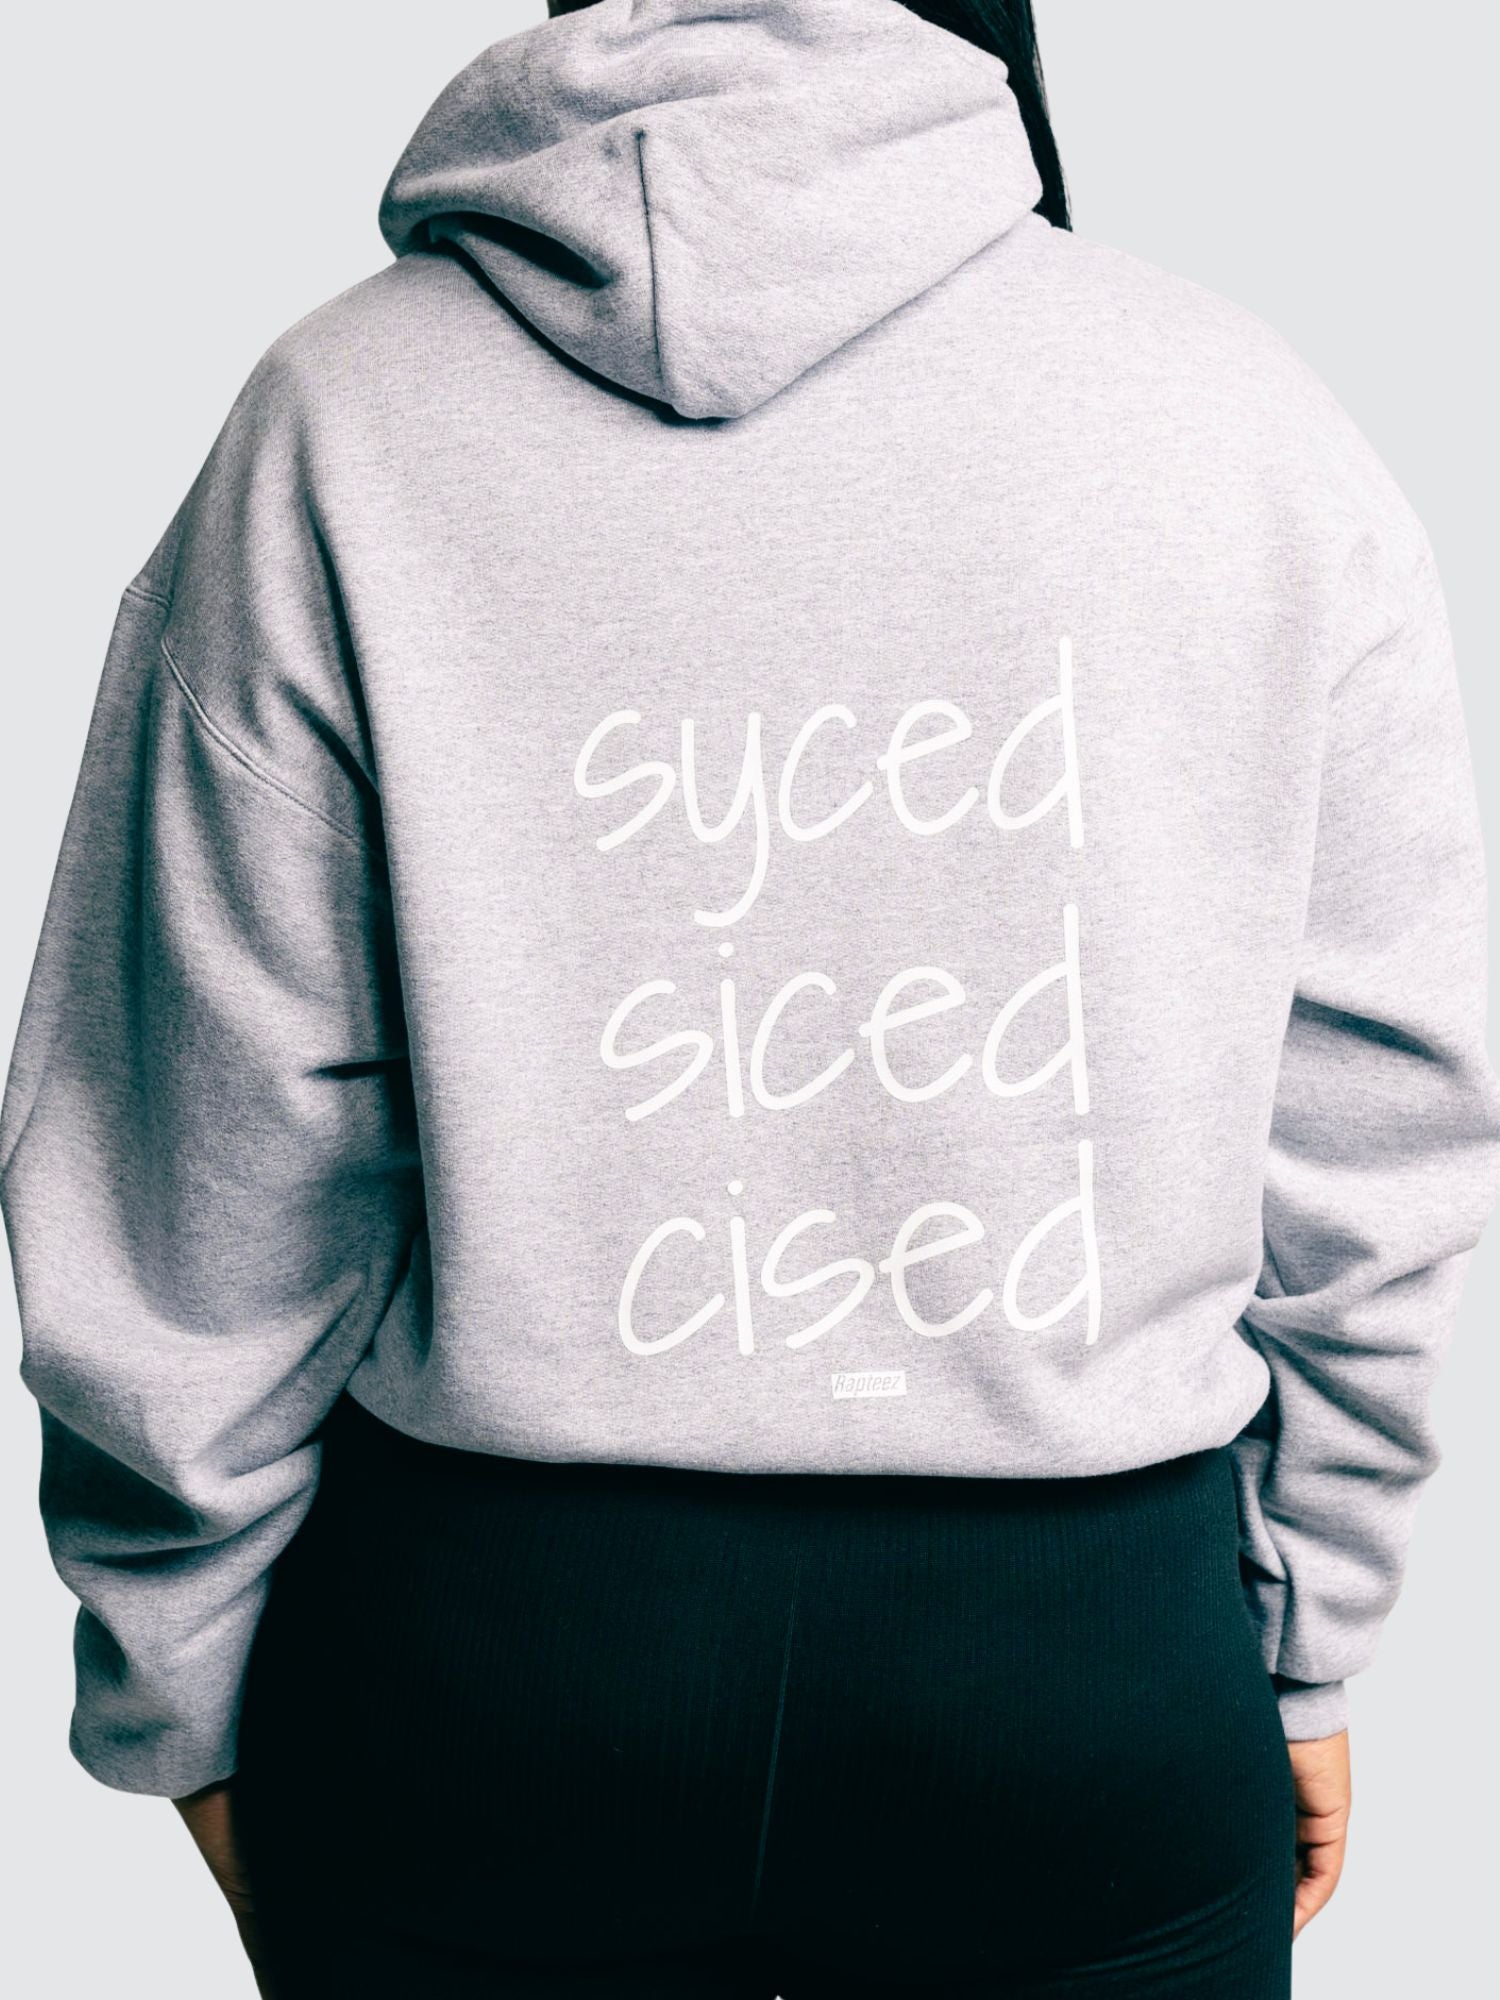 Syced Siced Cised Champion® Hoodie | Grey